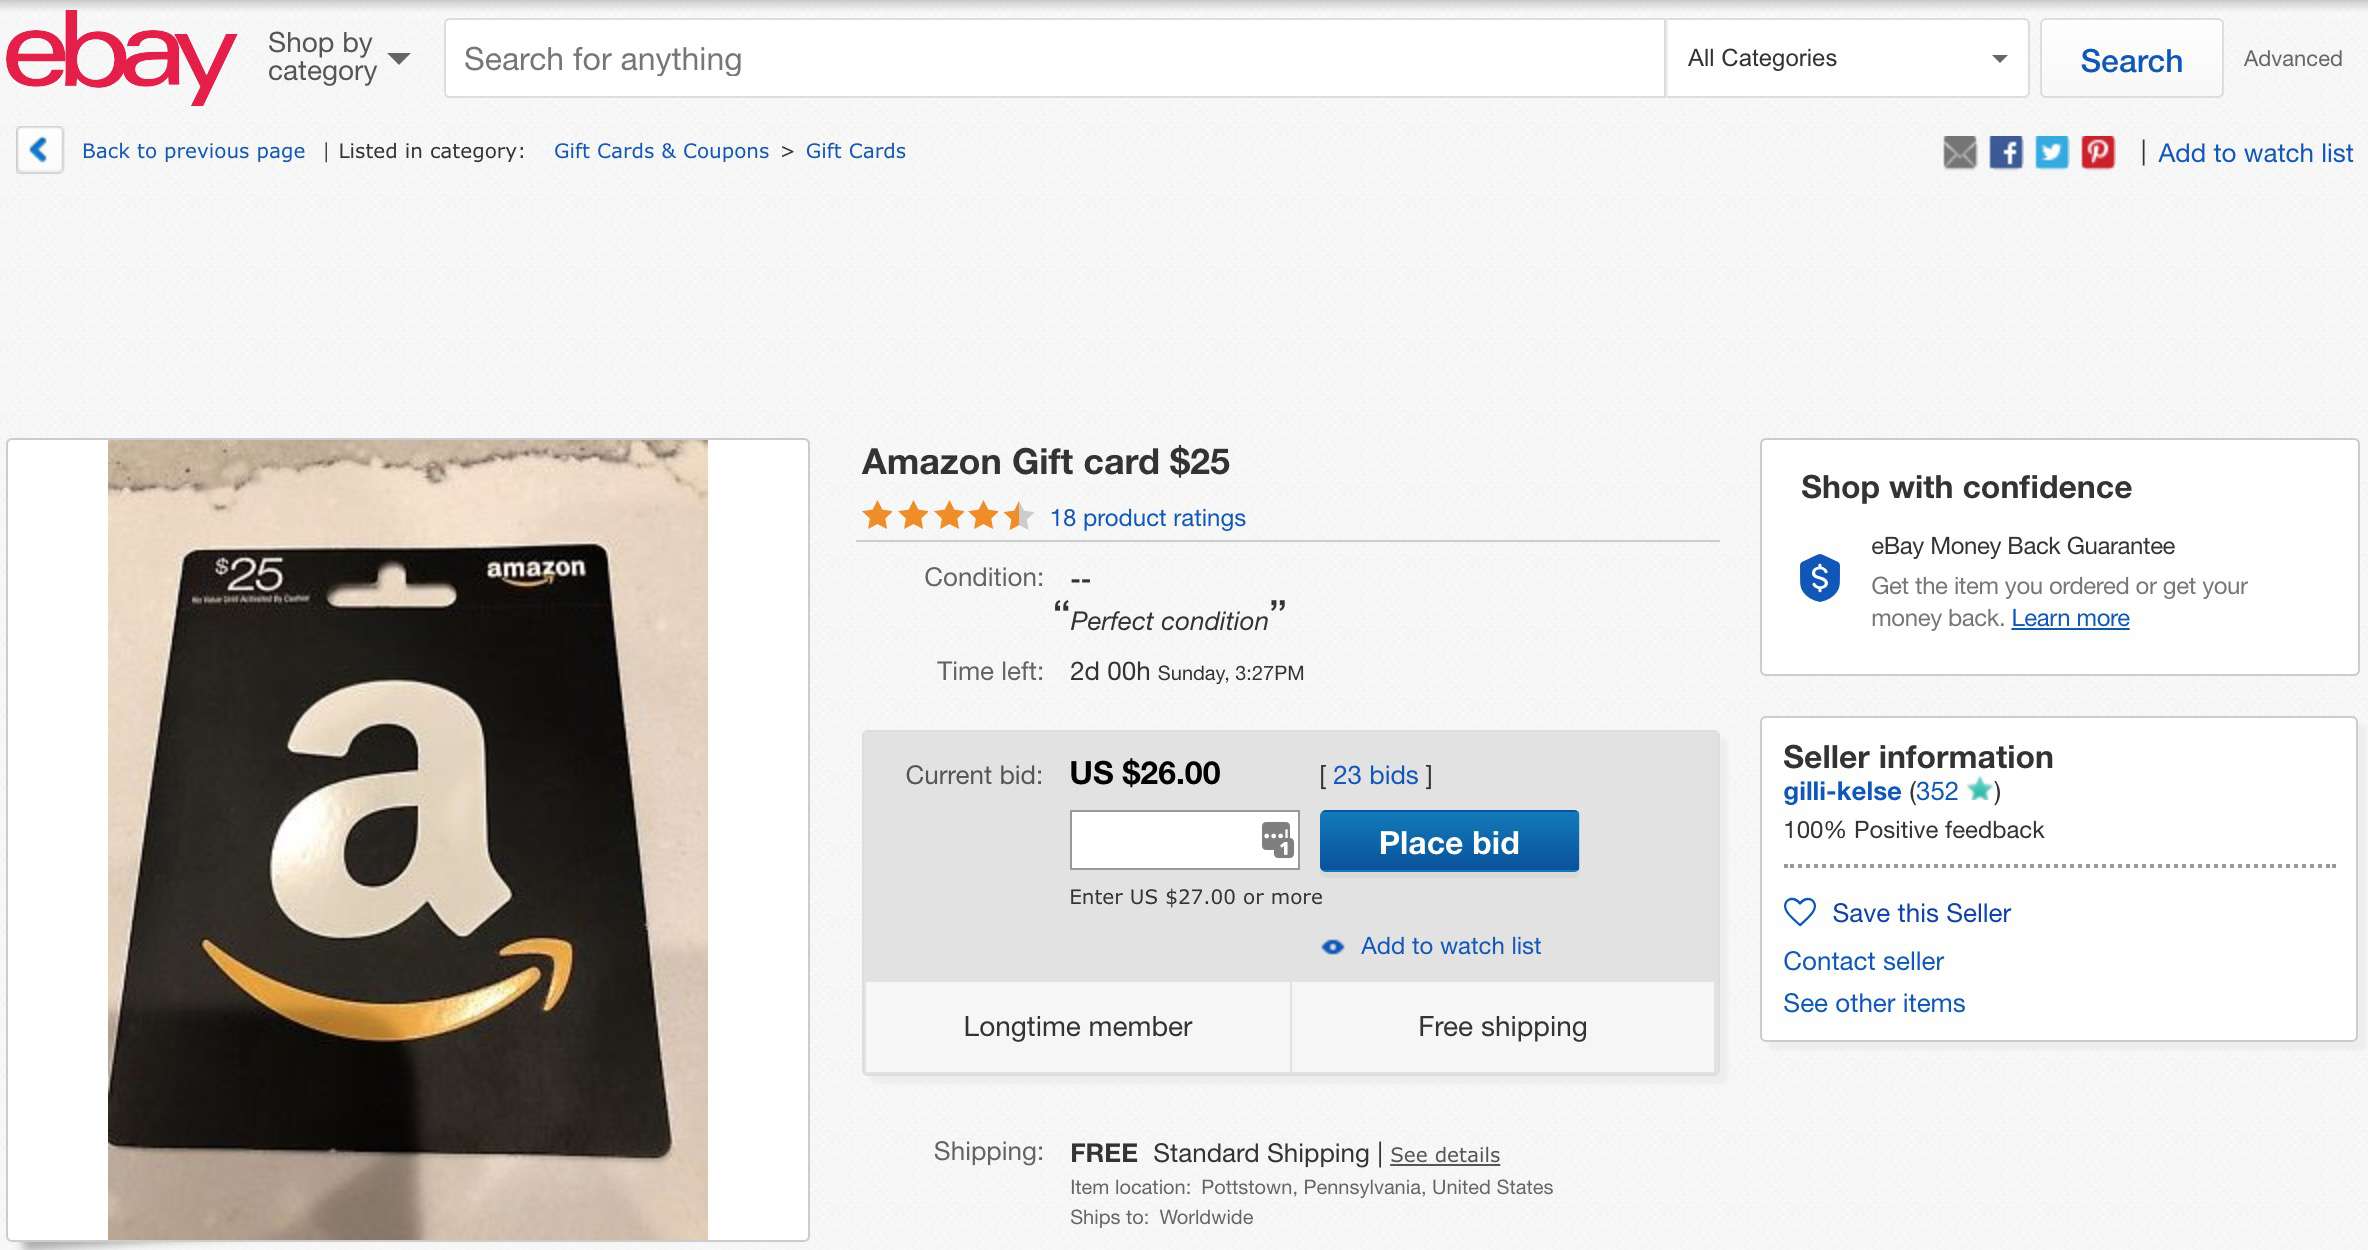 Amazon-cadeaubonveiling op ebay